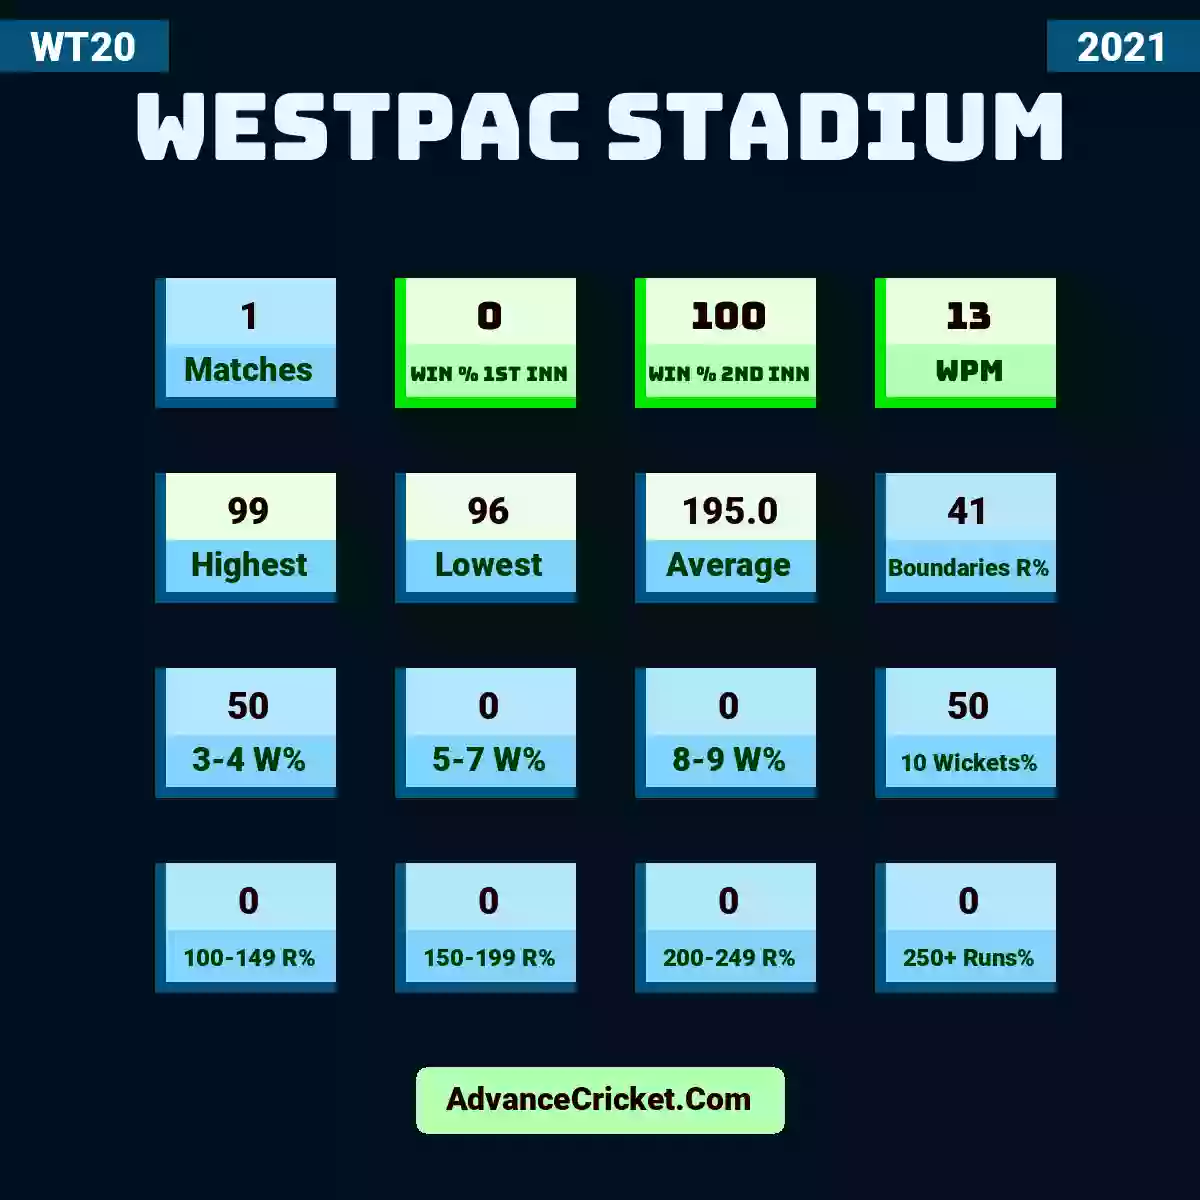 Image showing Westpac Stadium with Matches: 1, Win % 1st Inn: 0, Win % 2nd Inn: 100, WPM: 13, Highest: 99, Lowest: 96, Average: 195.0, Boundaries R%: 41, 3-4 W%: 50, 5-7 W%: 0, 8-9 W%: 0, 10 Wickets%: 50, 100-149 R%: 0, 150-199 R%: 0, 200-249 R%: 0, 250+ Runs%: 0.